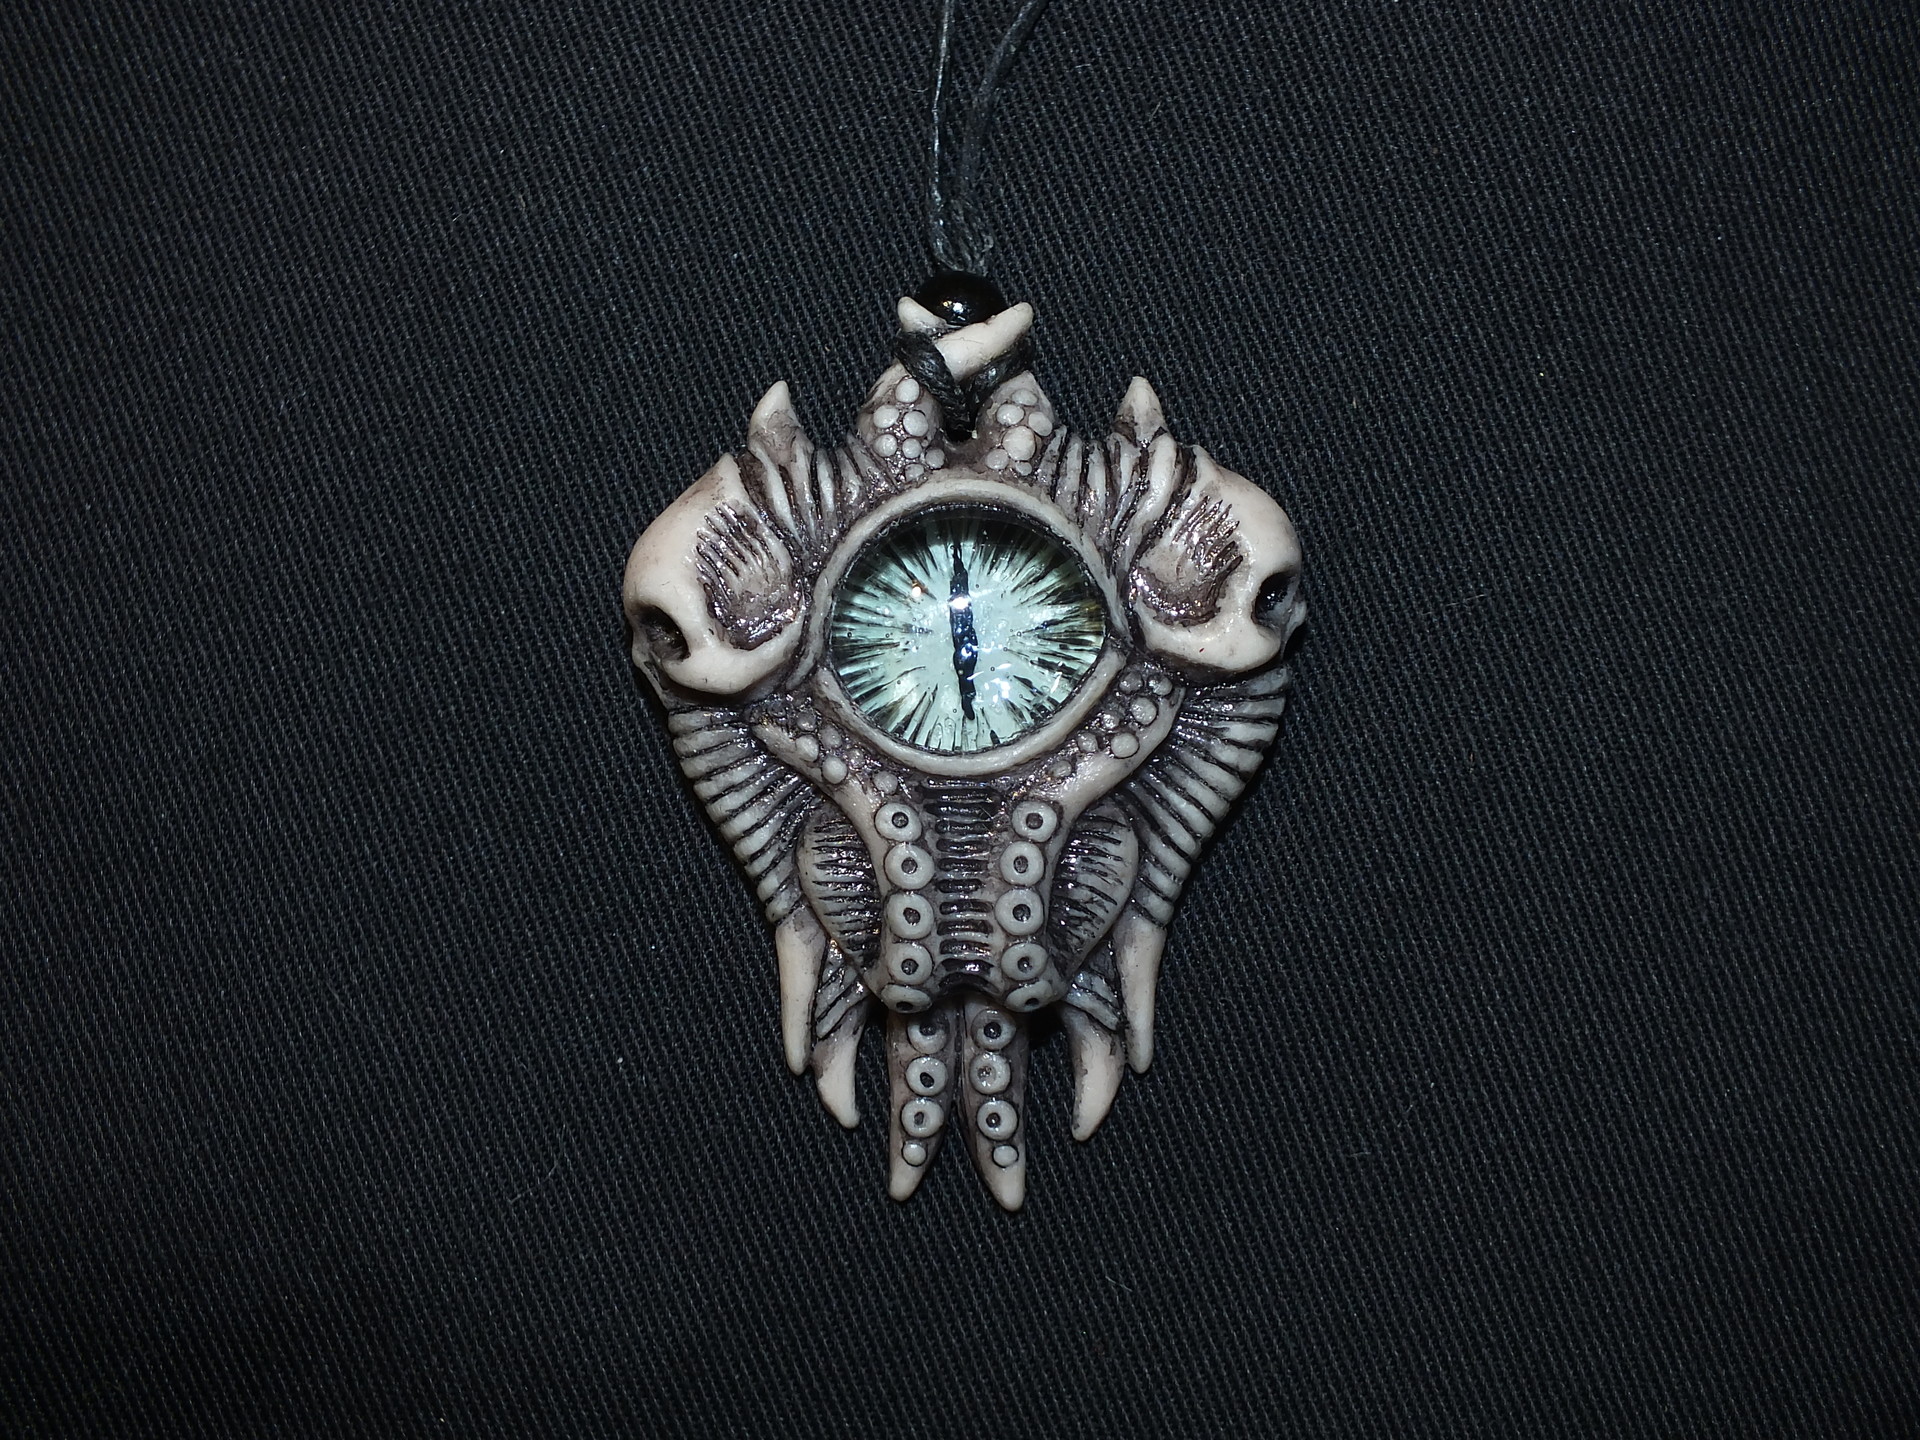 ArtStation - pendant with an eye and skulls